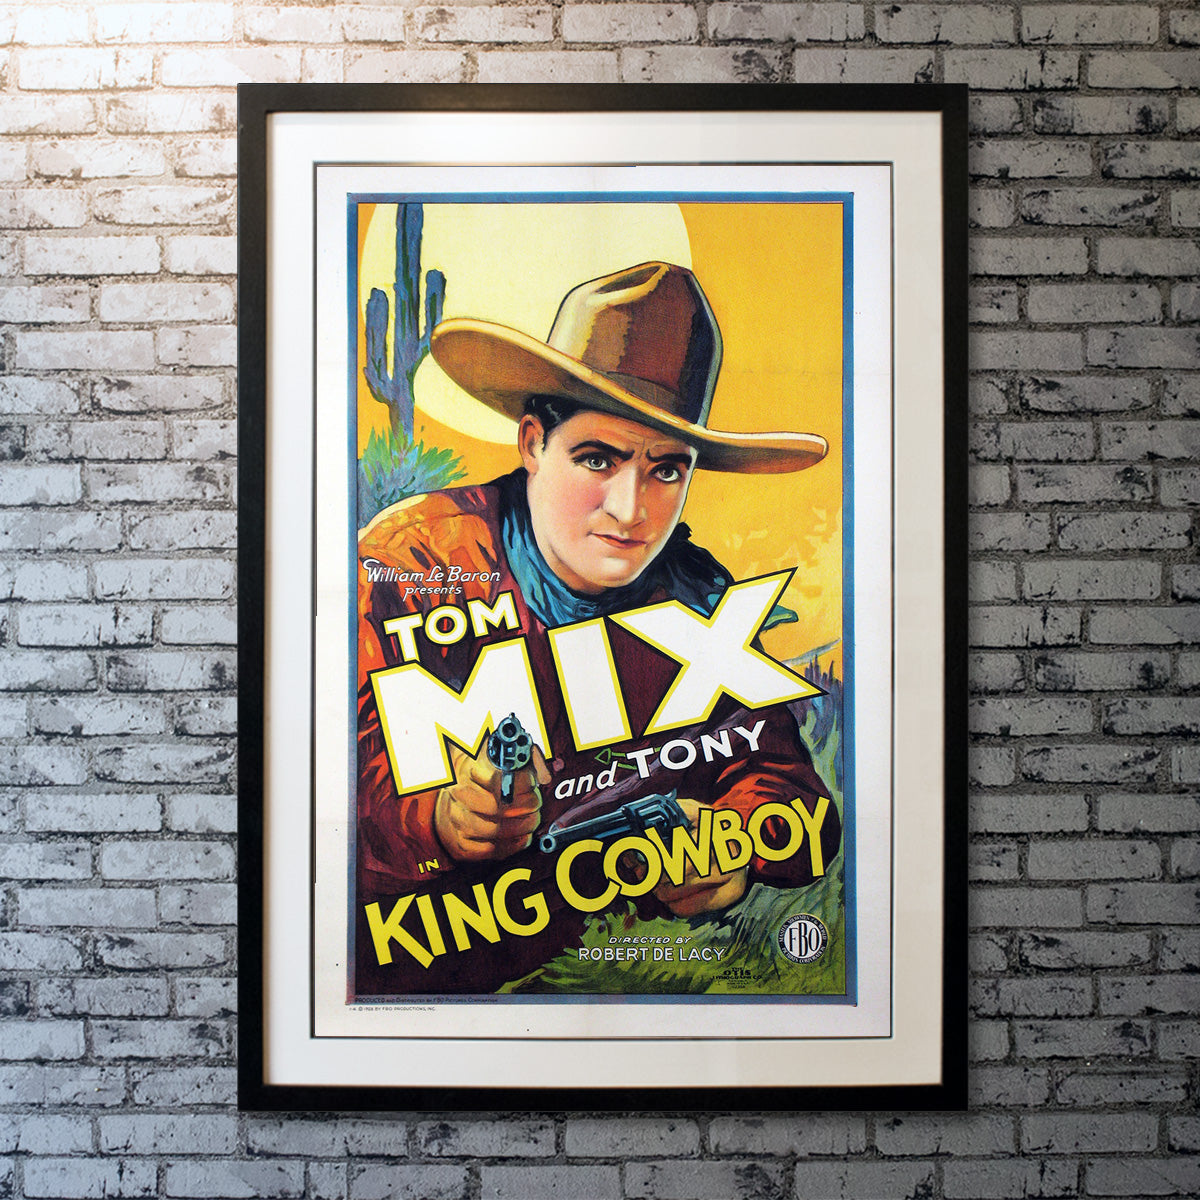 King Cowboy (1928)